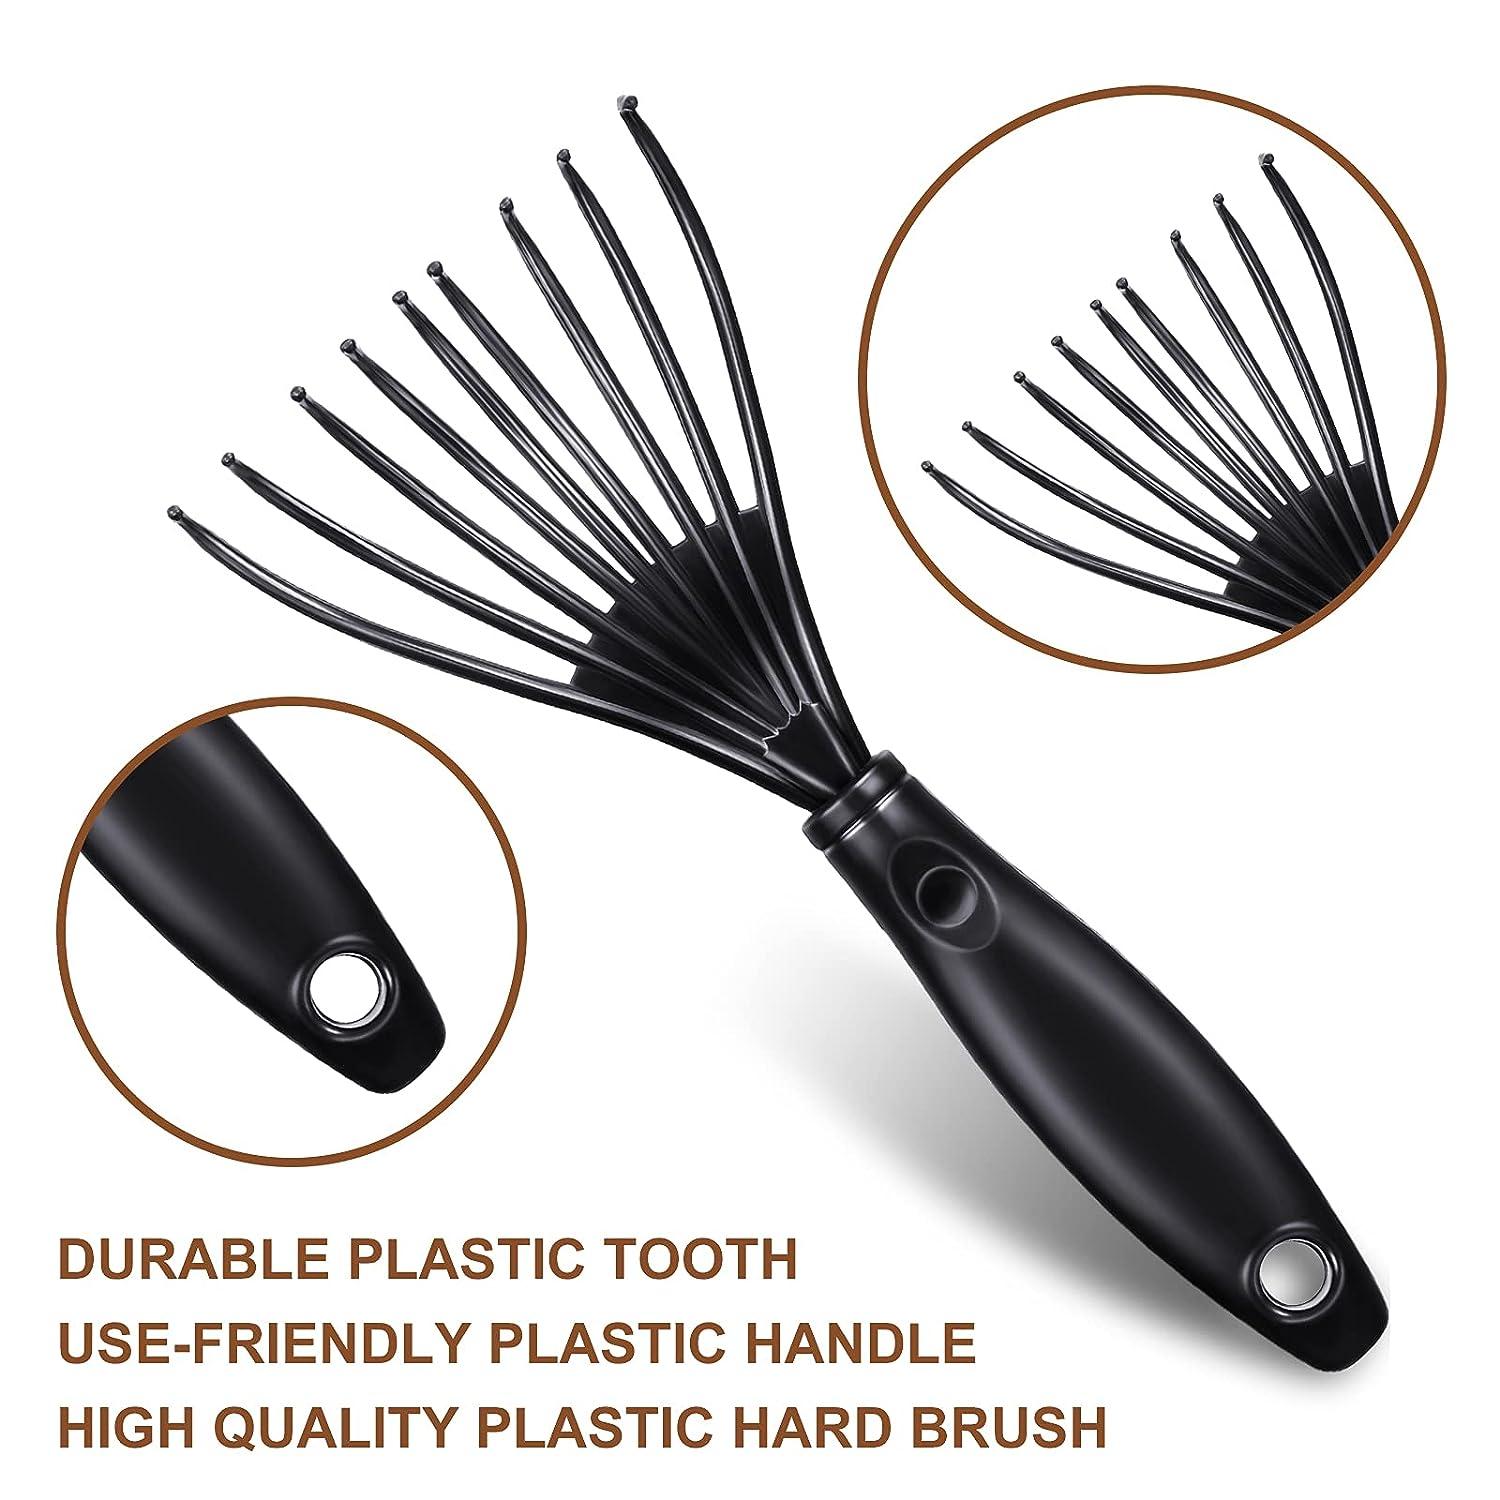 Hairbrush Cleaner Rake Tool Cleaning Brush Comb Embedded Tool for